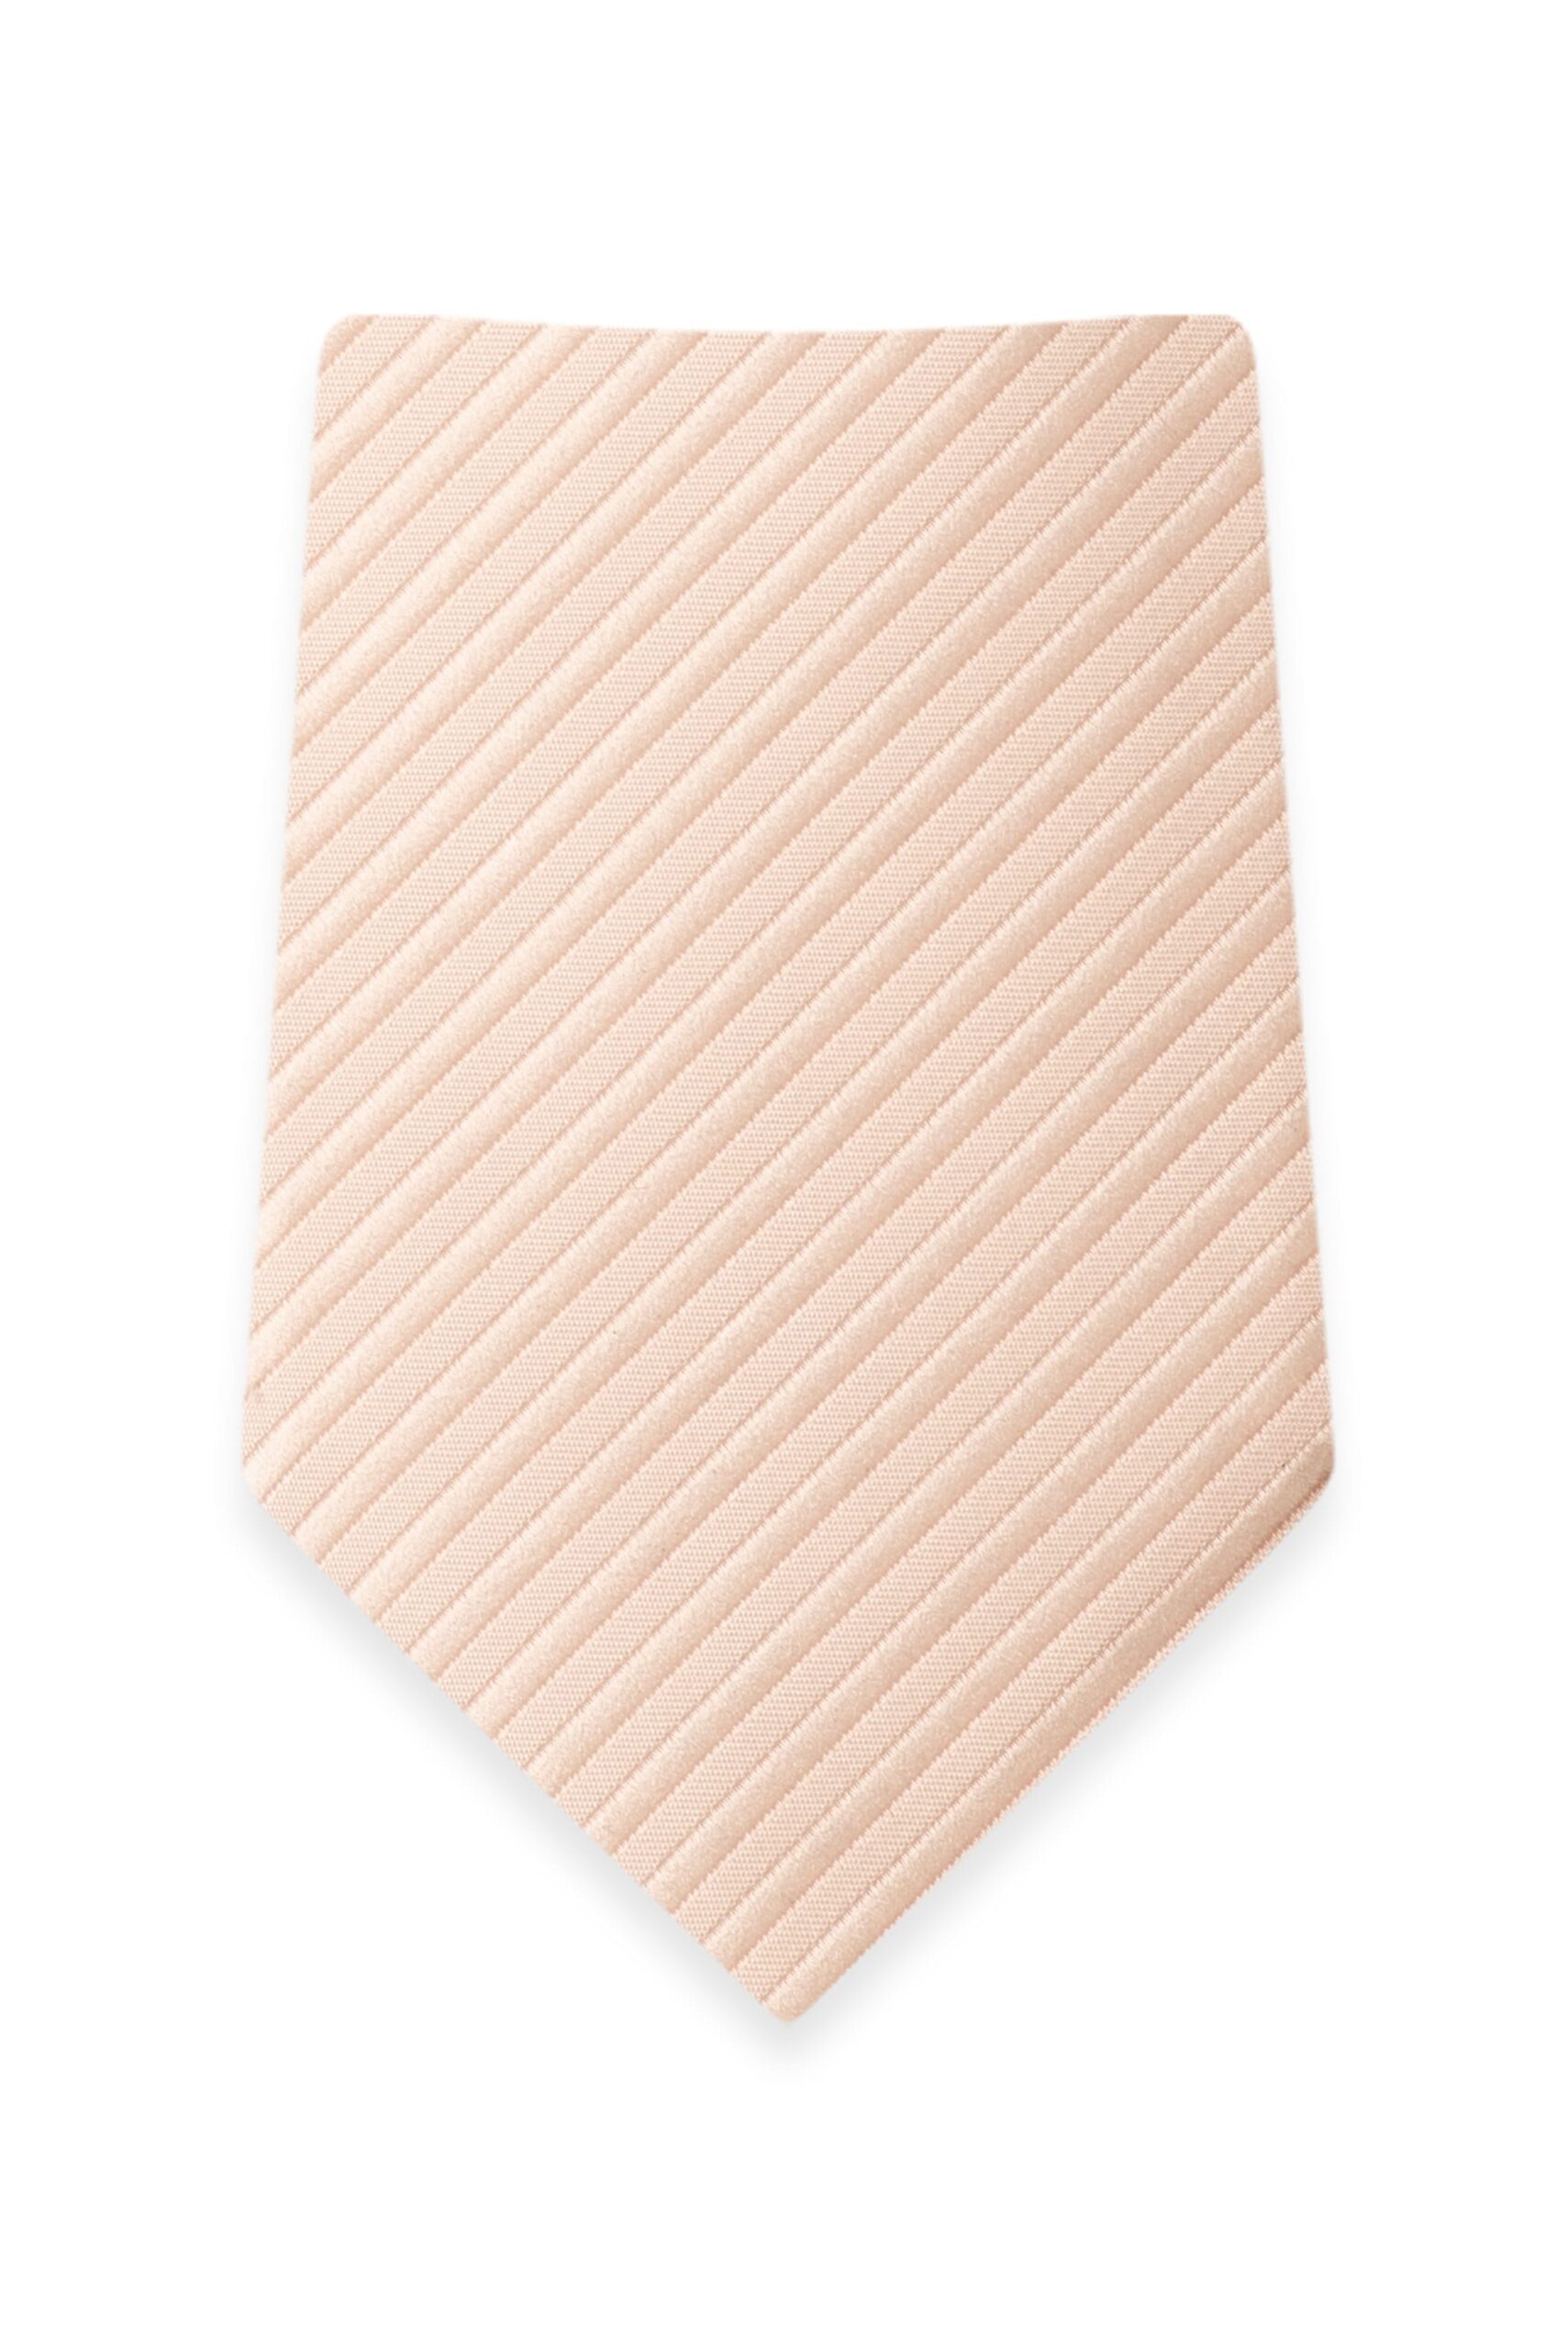 Striped Blush Self-Tie Windsor Tie 1